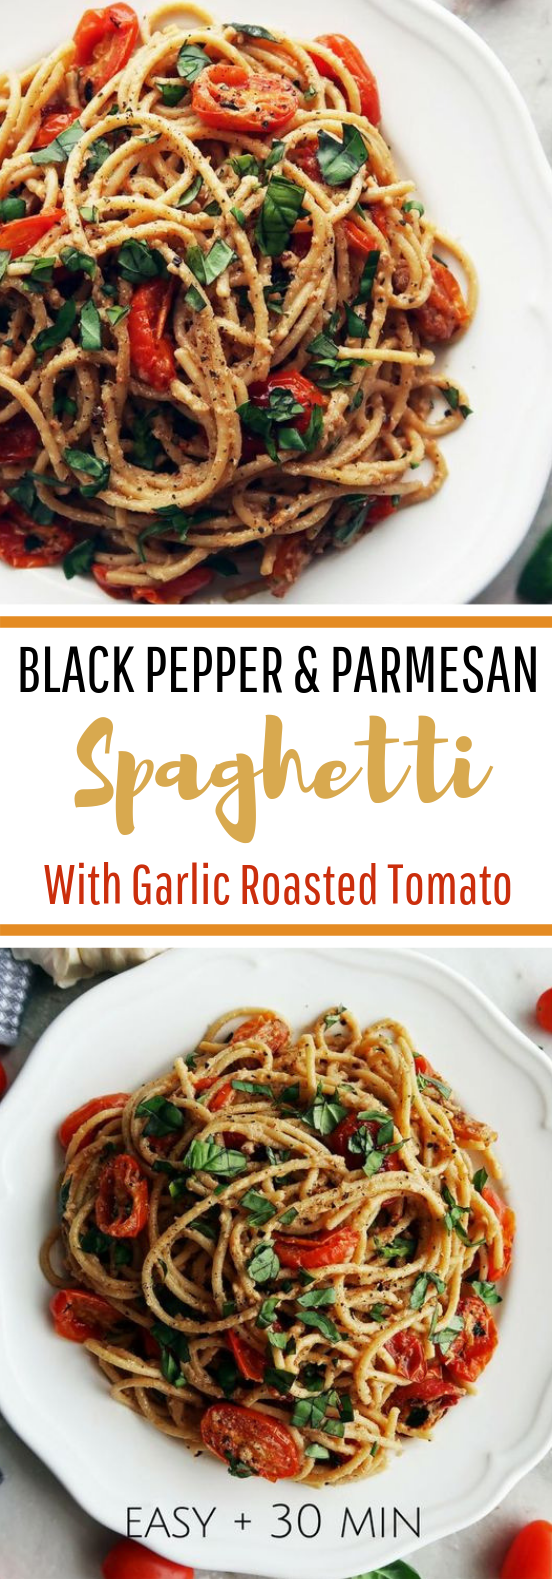 BLACK PEPPER & PARMESAN SPAGHETTI WITH GARLIC ROASTED TOMATOES #vegetarian #pasta